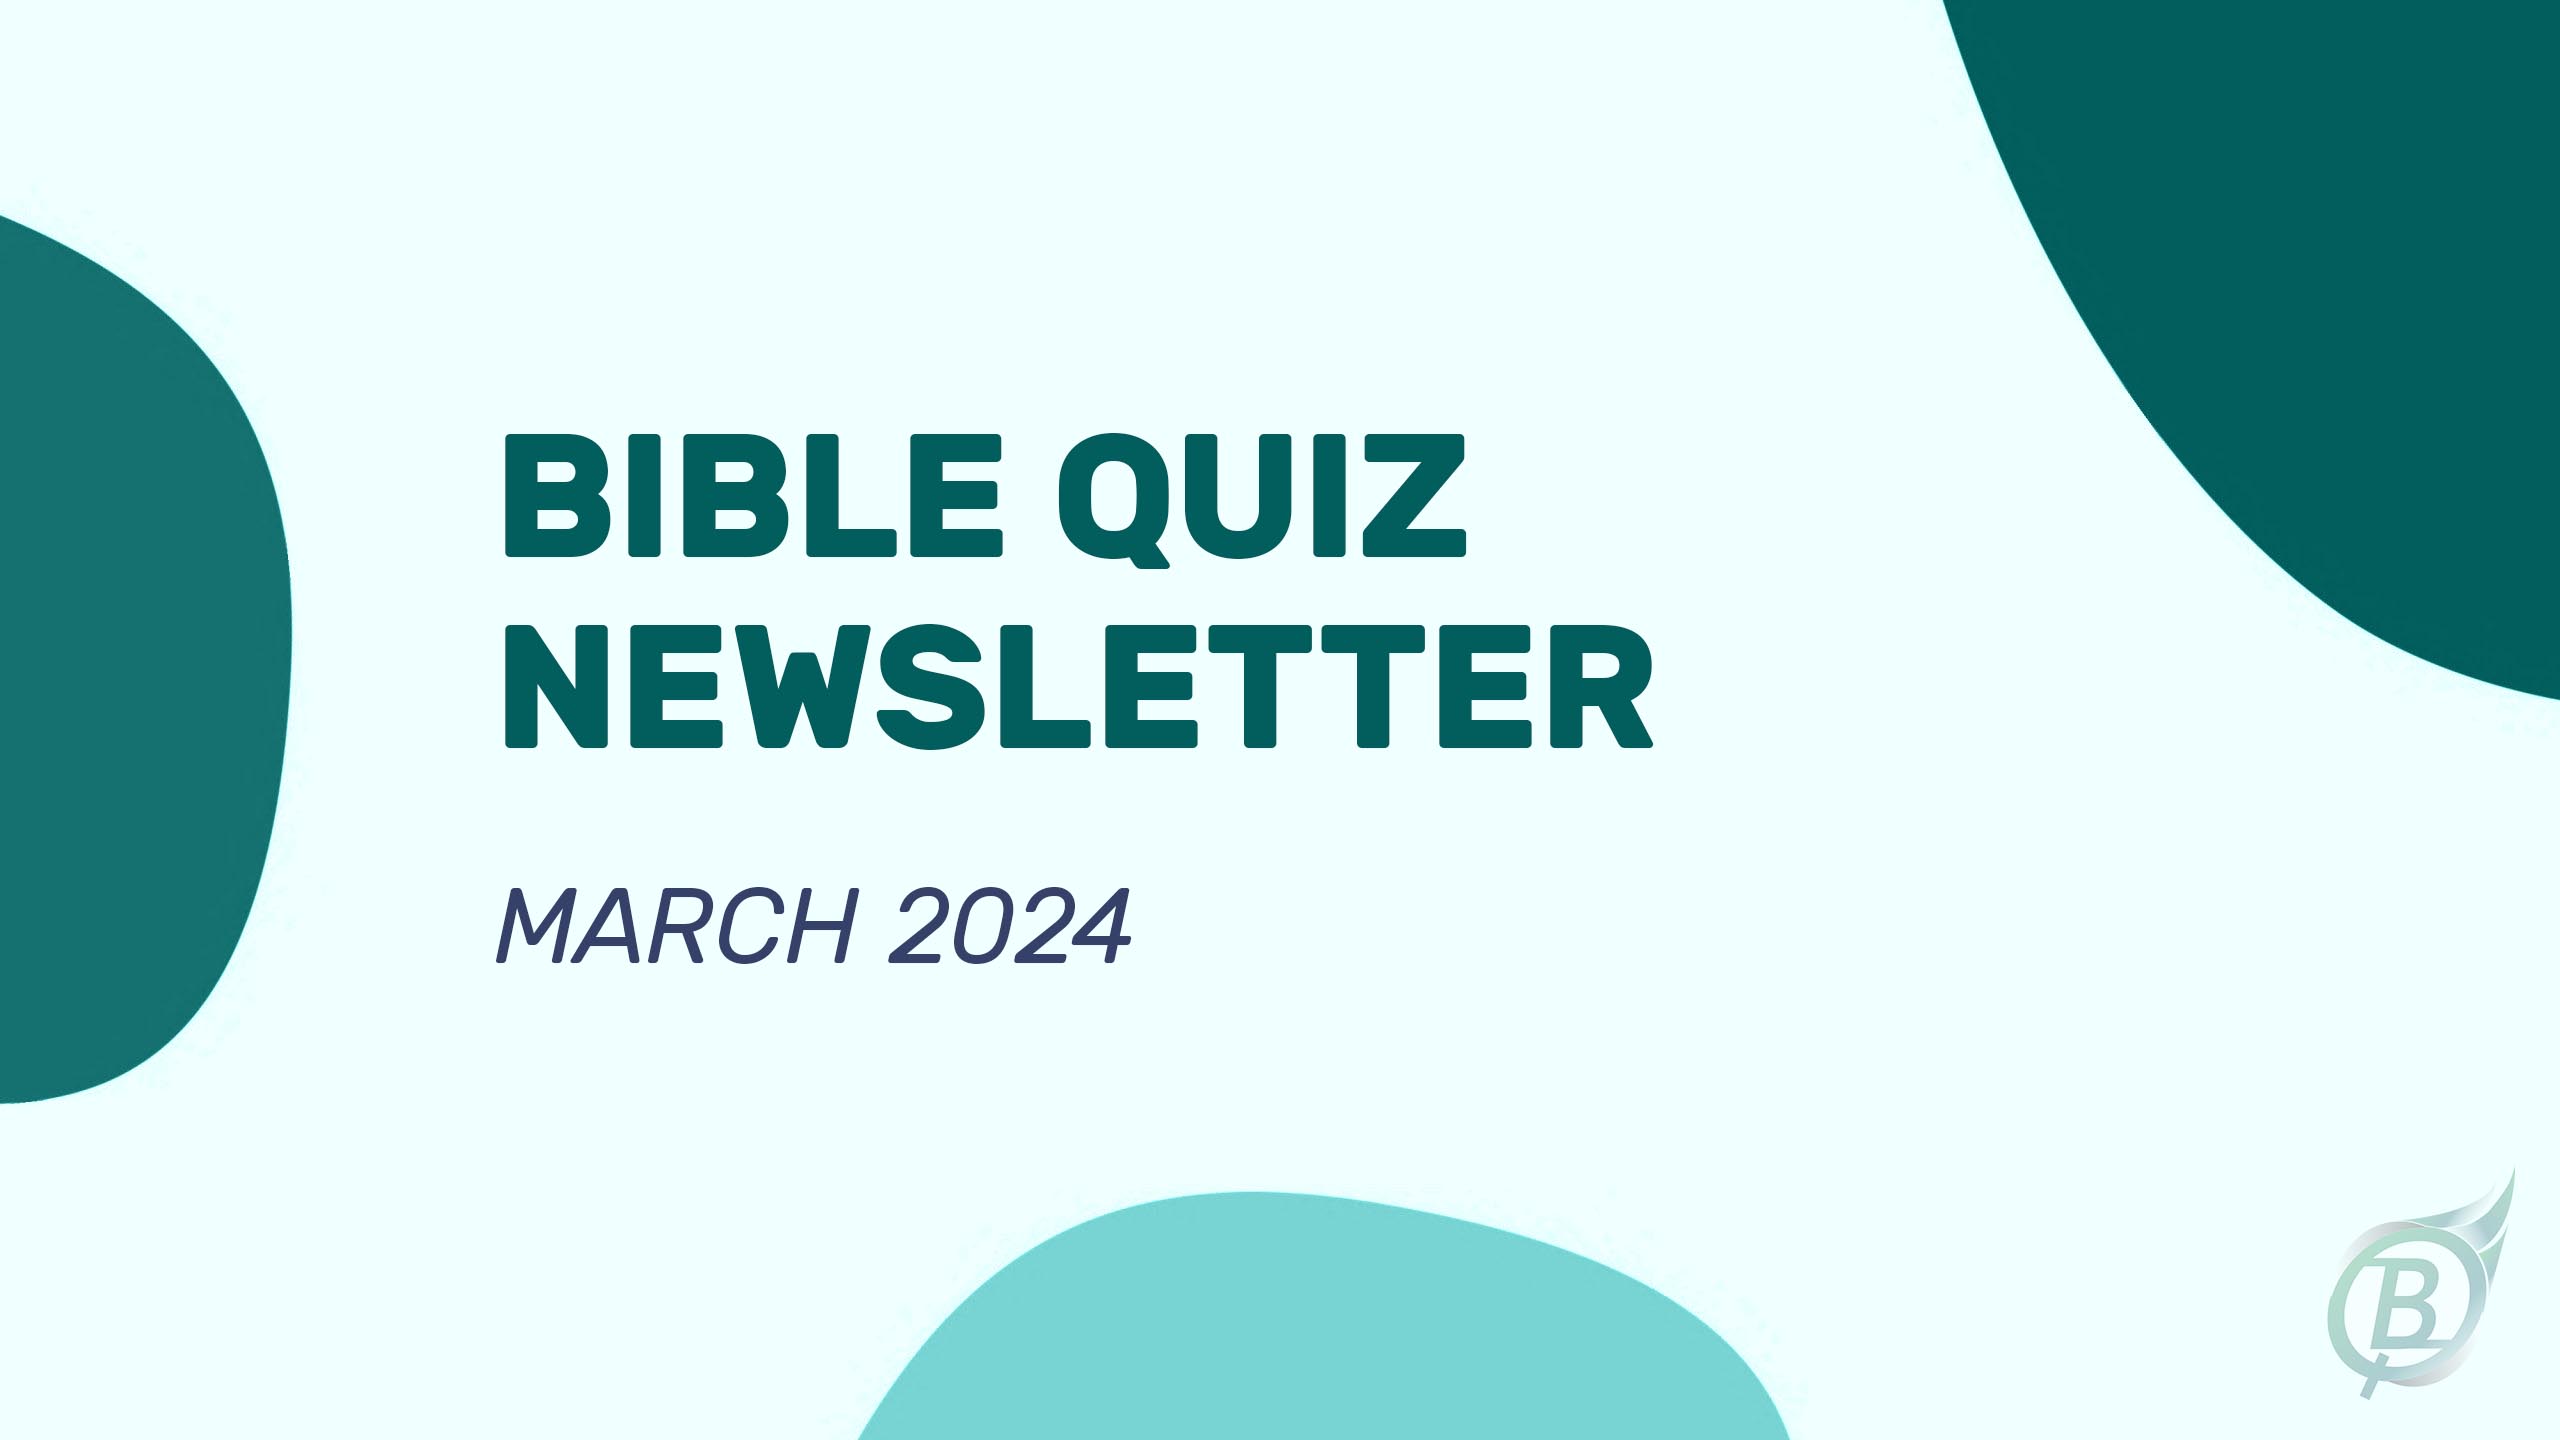 Bible Quiz Newsletter - March 2024